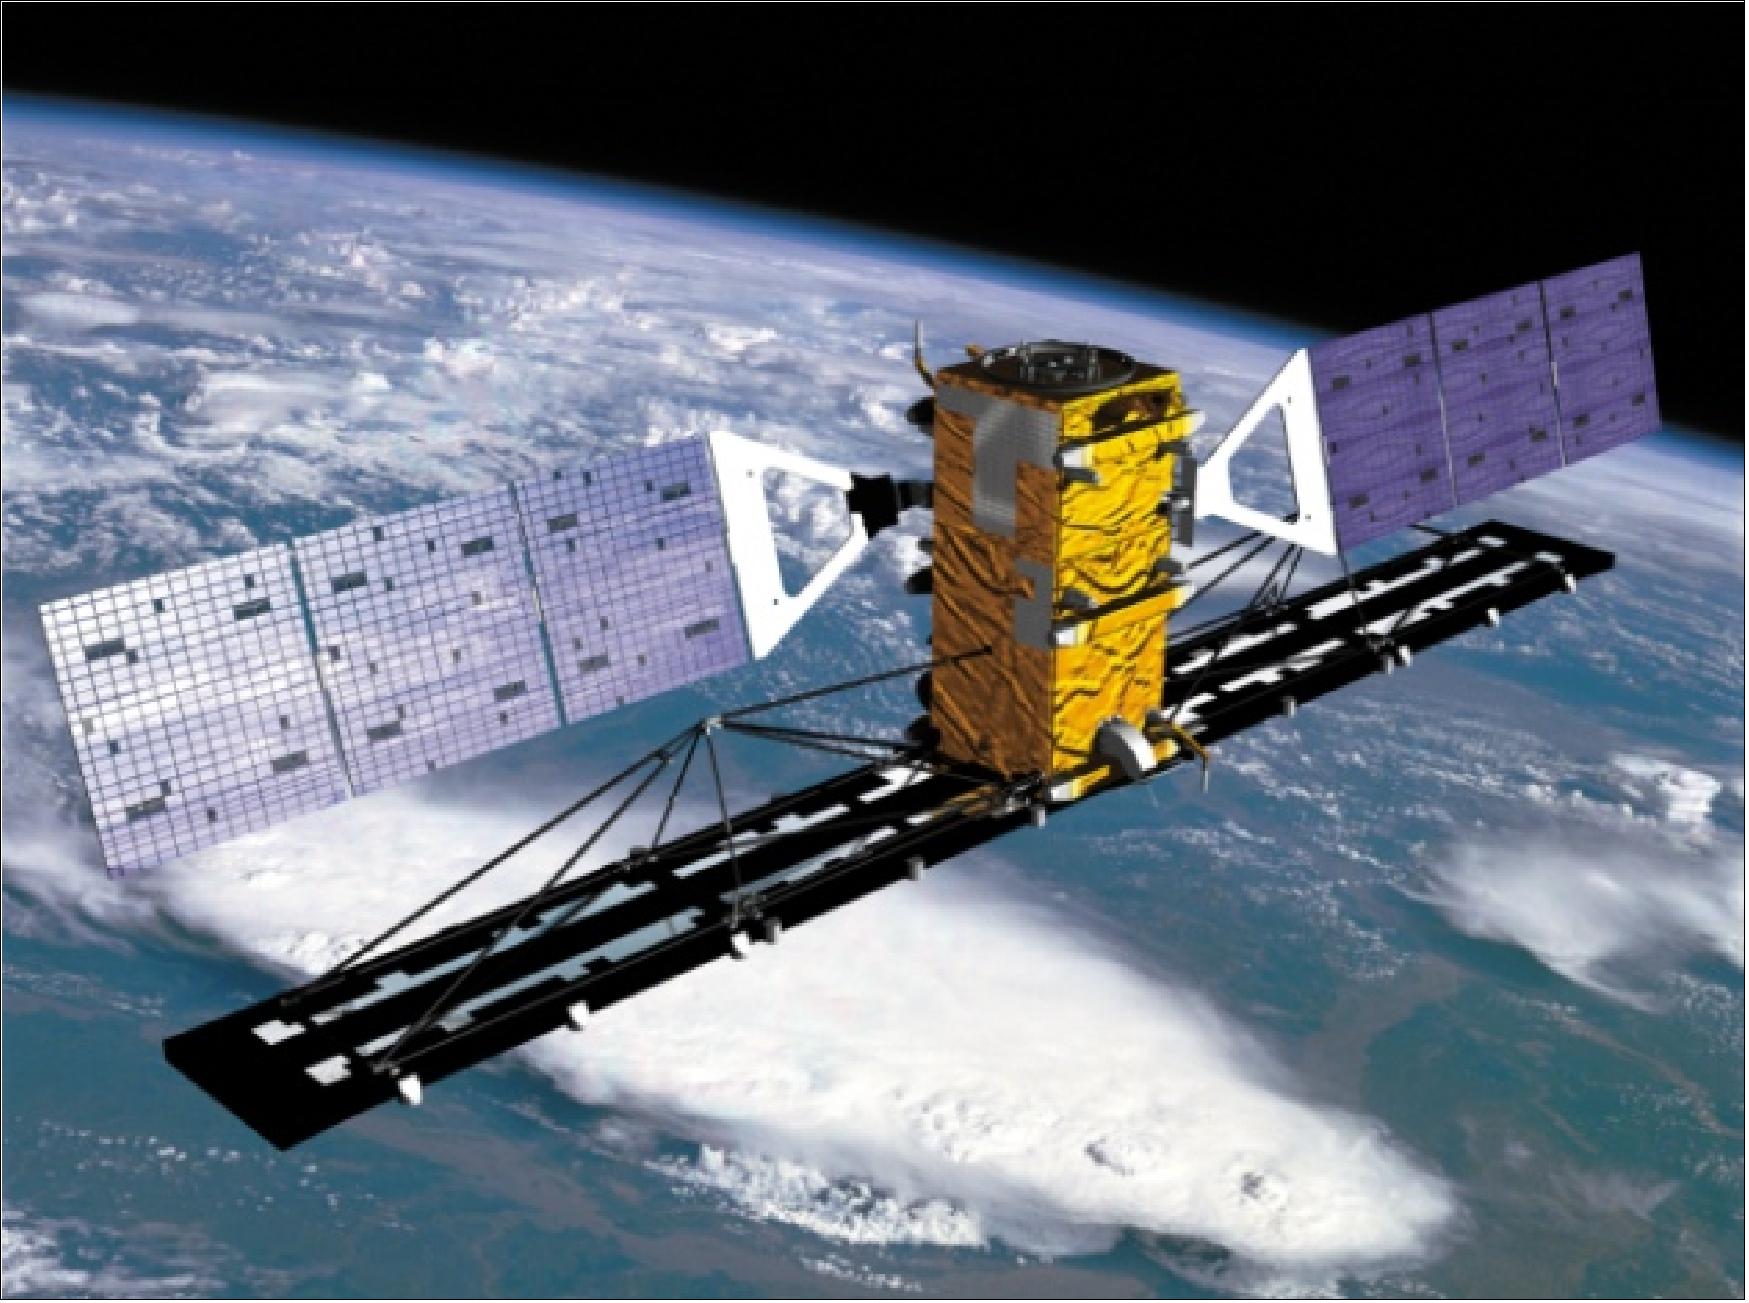 Figure 2: Artist's rendition of the RADARSAT-2 satellite in orbit (image credit: MDA)